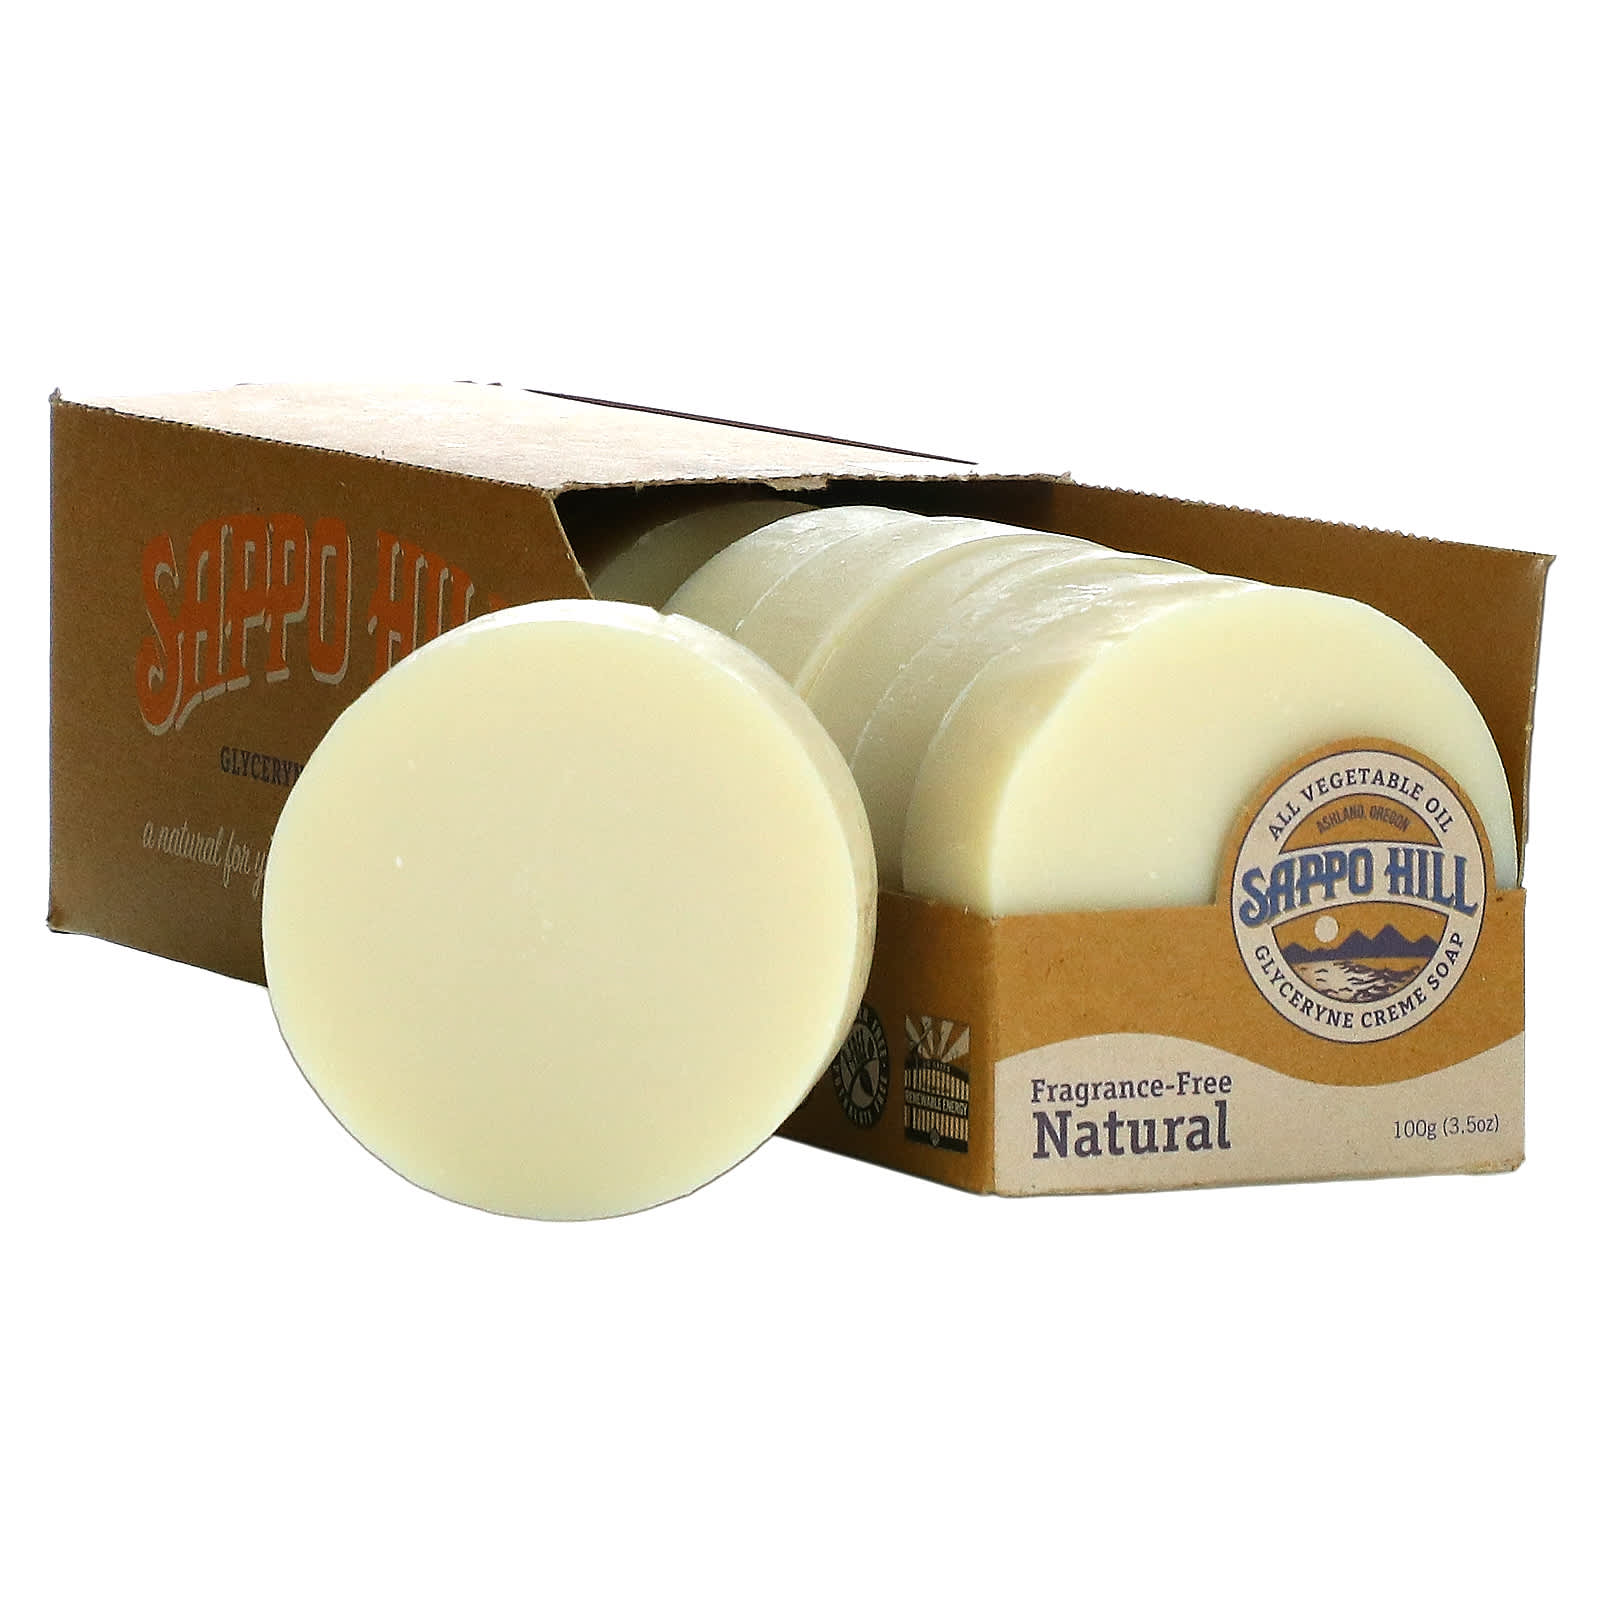 Sappo Hill, Glyceryne Cream Soap, Natural, Fragrance-Free, 12 Bars 